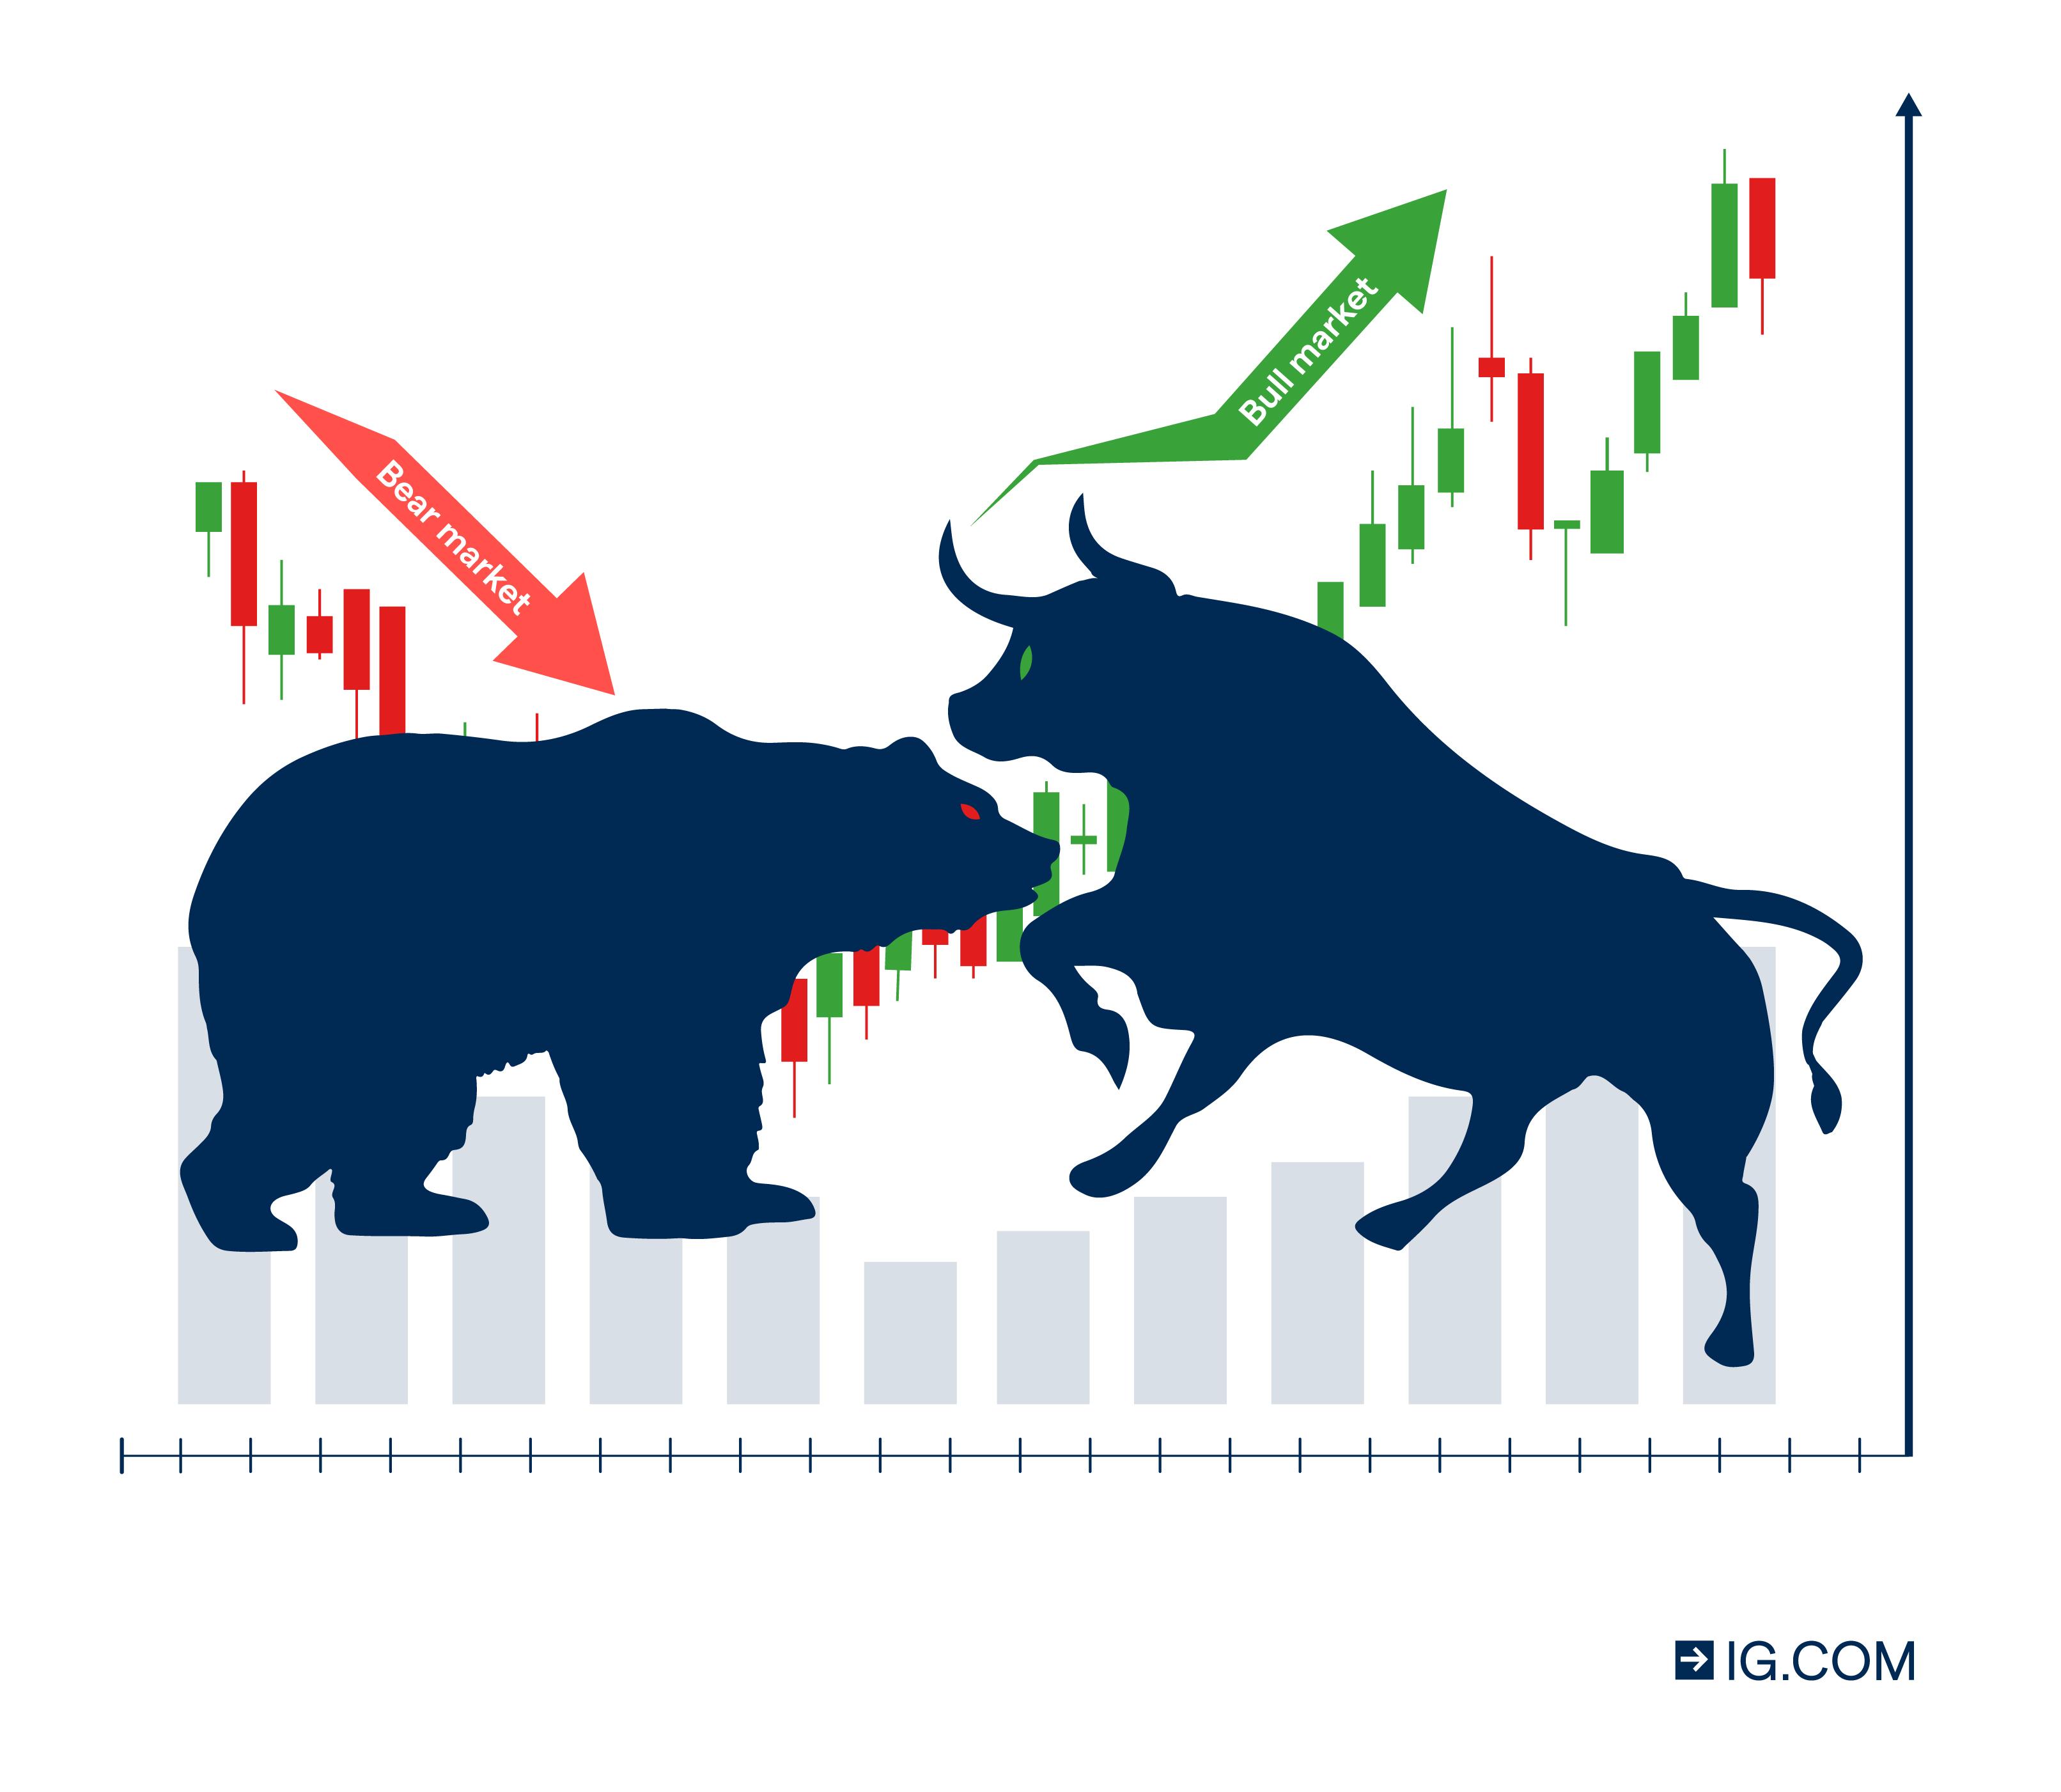 Bear/Bull market